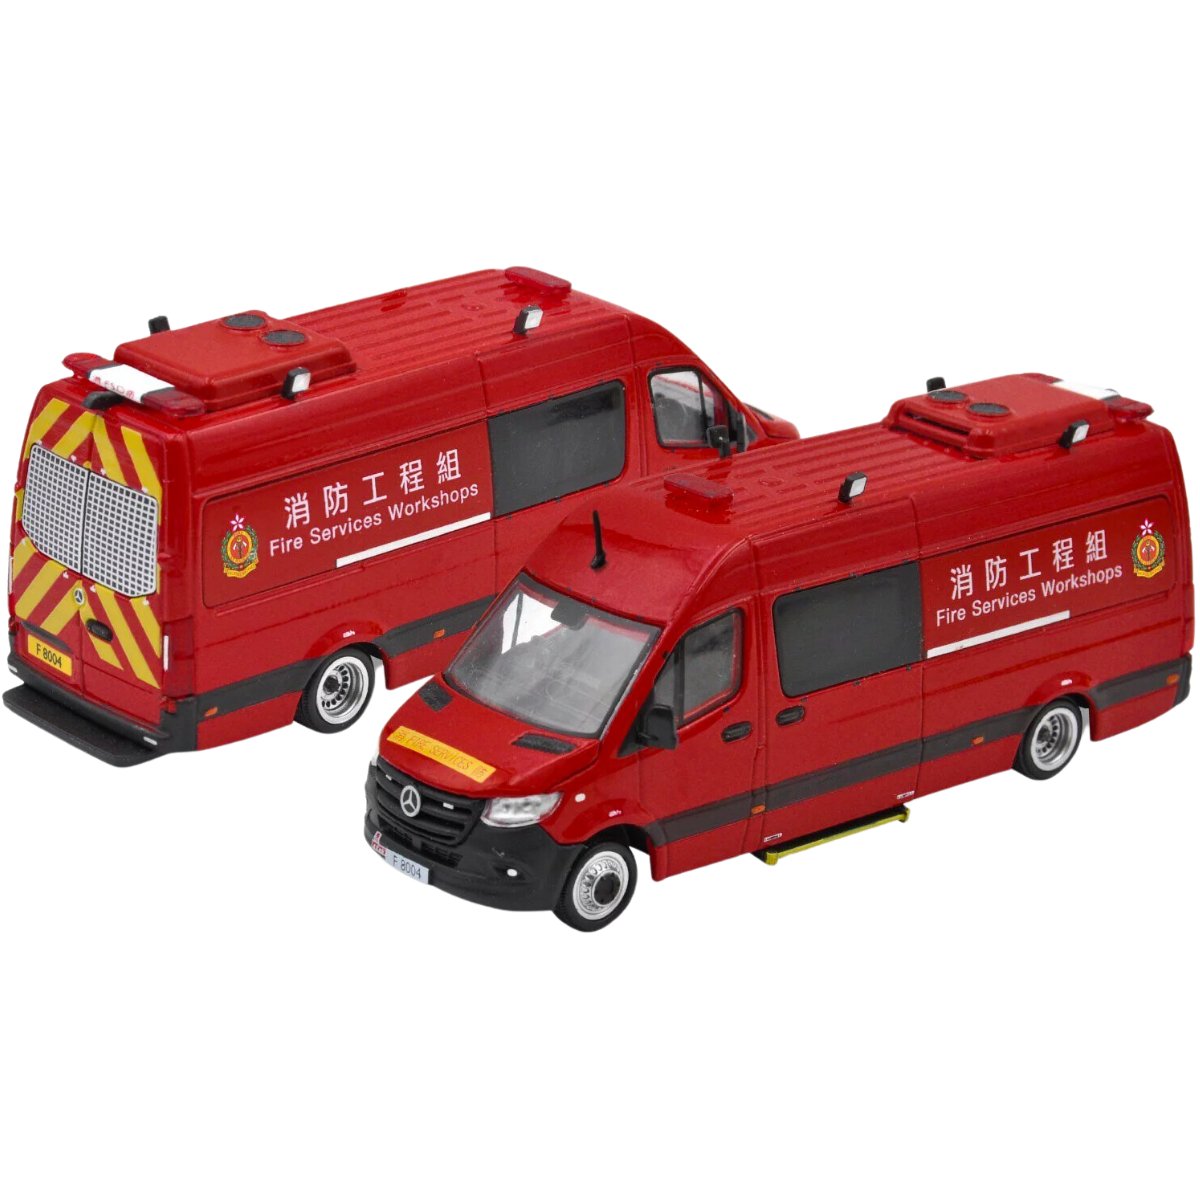 Era Car Mercedes Benz Sprinter HK Fire Services Van (1:64 Scale)